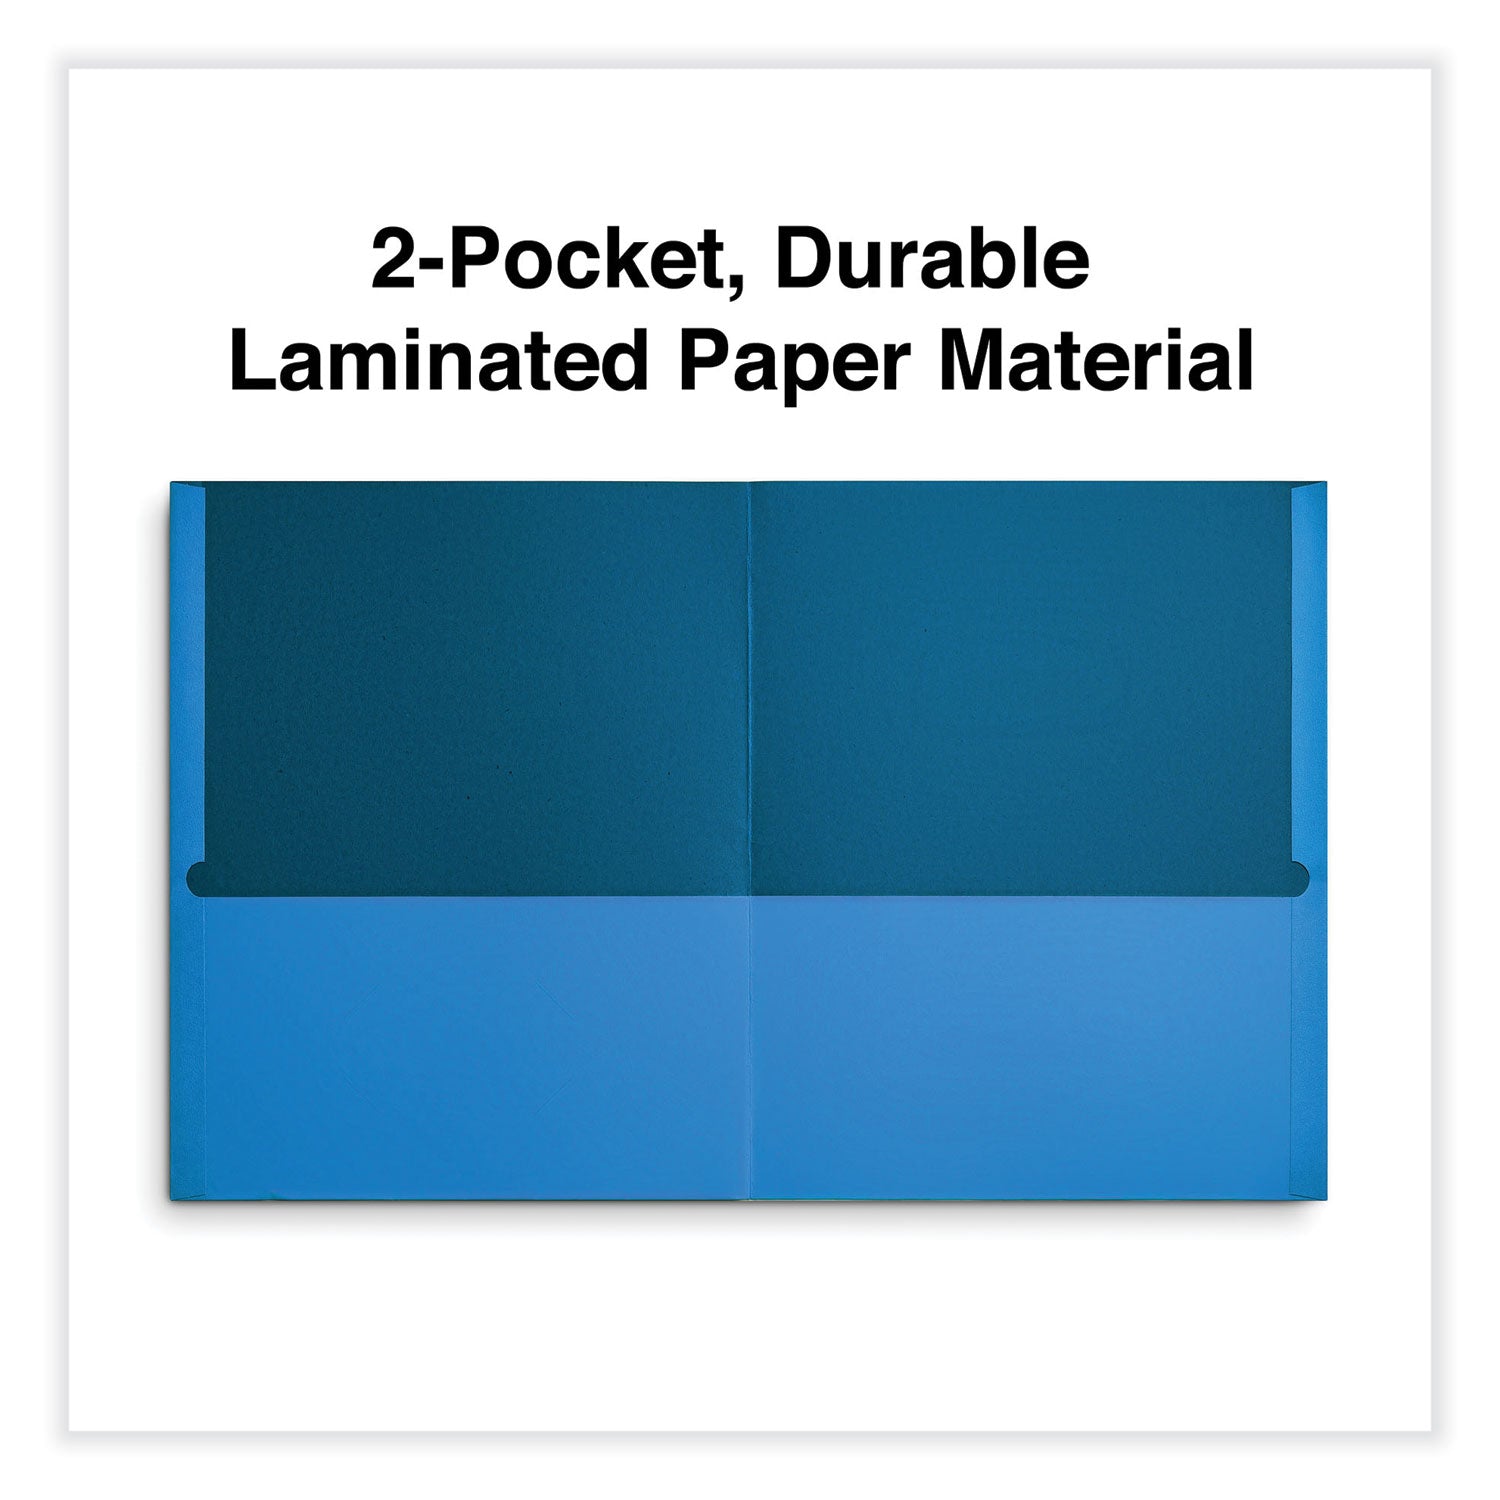 Two-Pocket Portfolio, Embossed Leather Grain Paper, 11 x 8.5, Light Blue, 25/Box - 